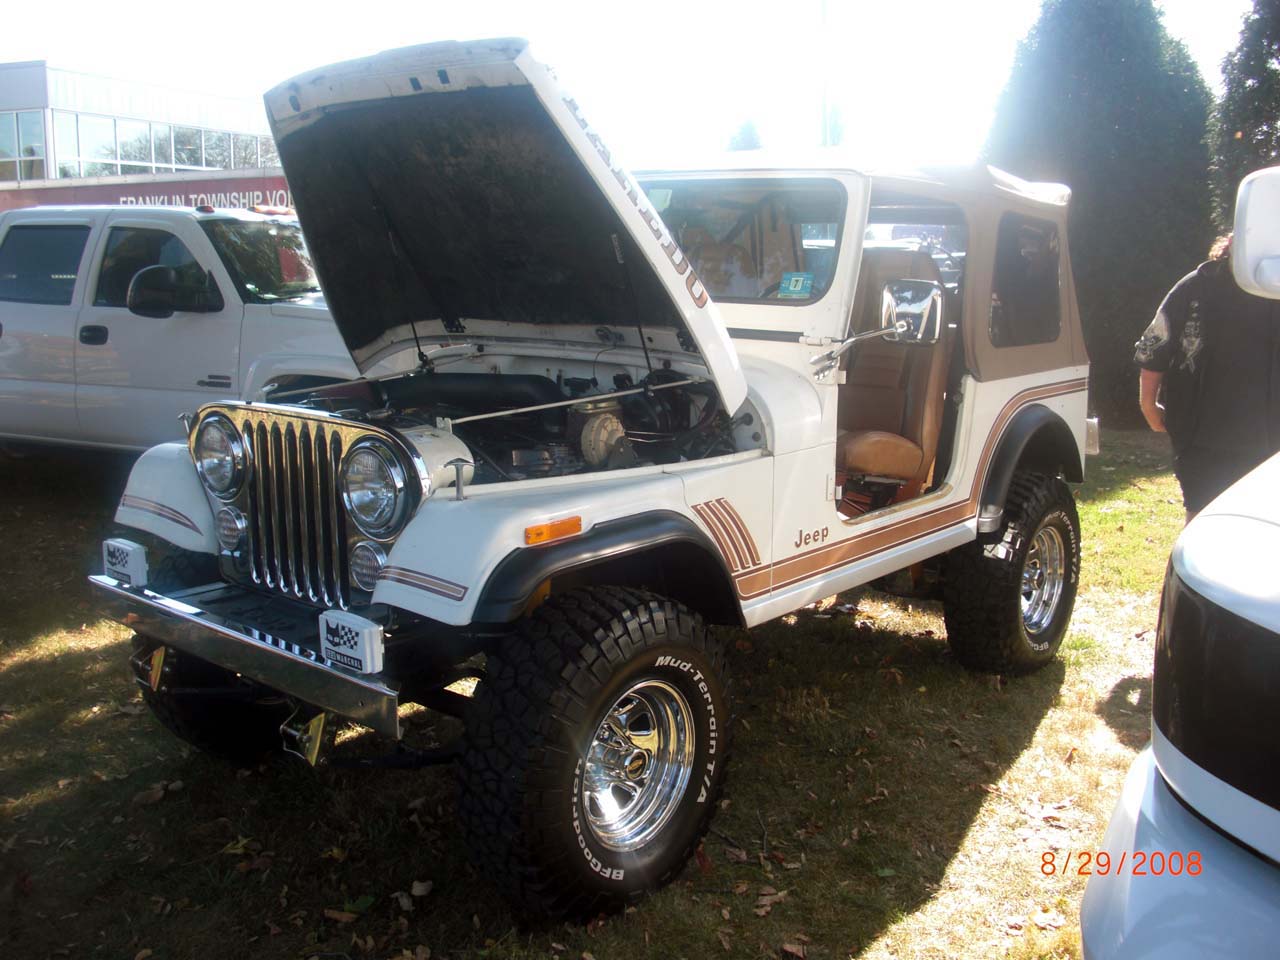 Andy's 1986 Jeep CJ-7 Laredo Mopar Fuel Injection Conversion 